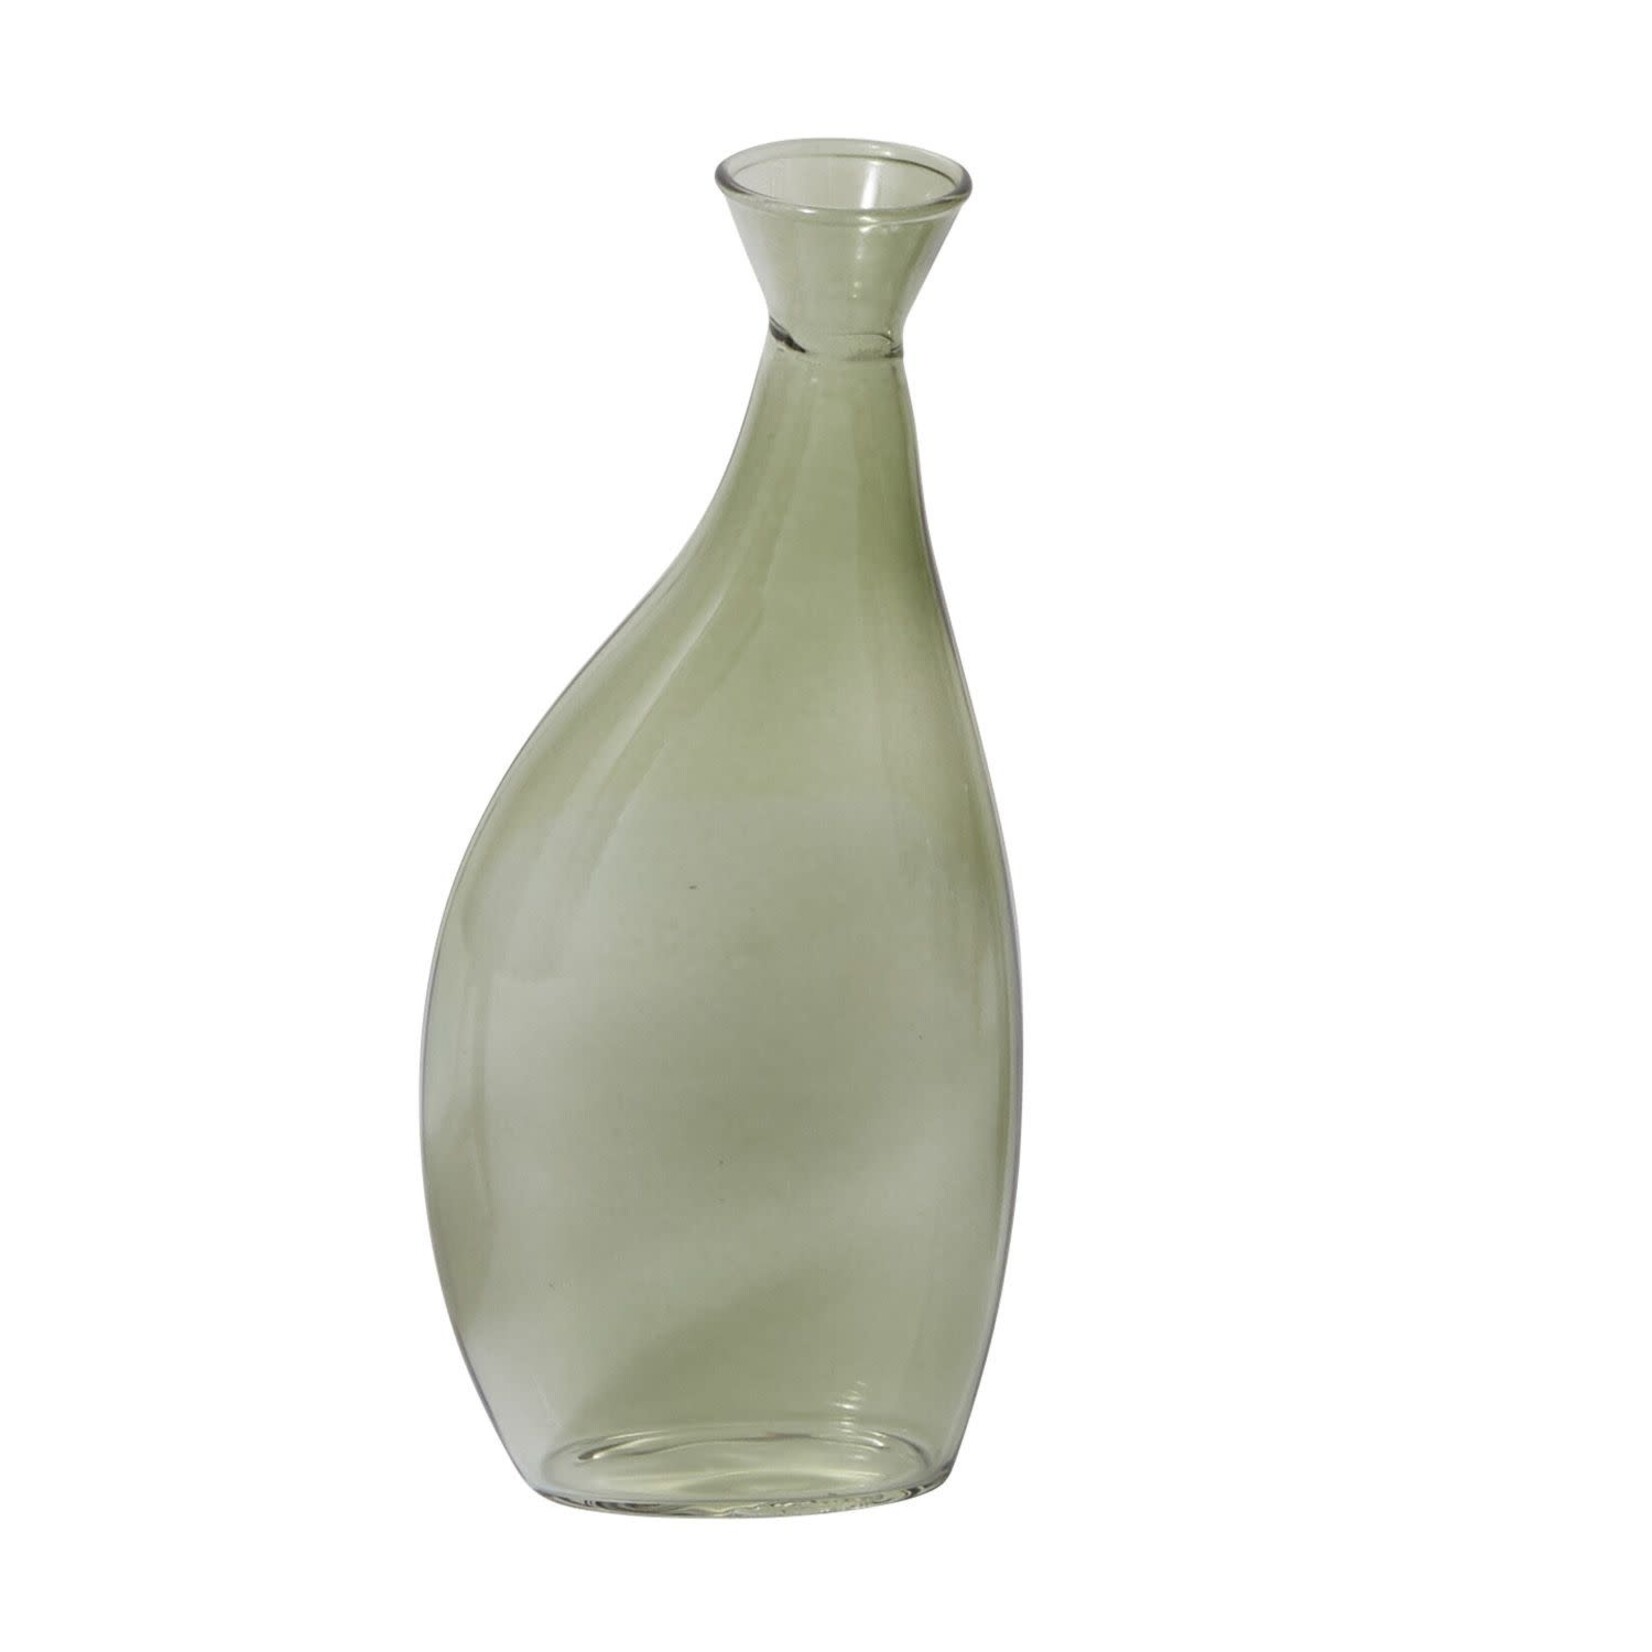 Mickler & Co. Seaglass Vase